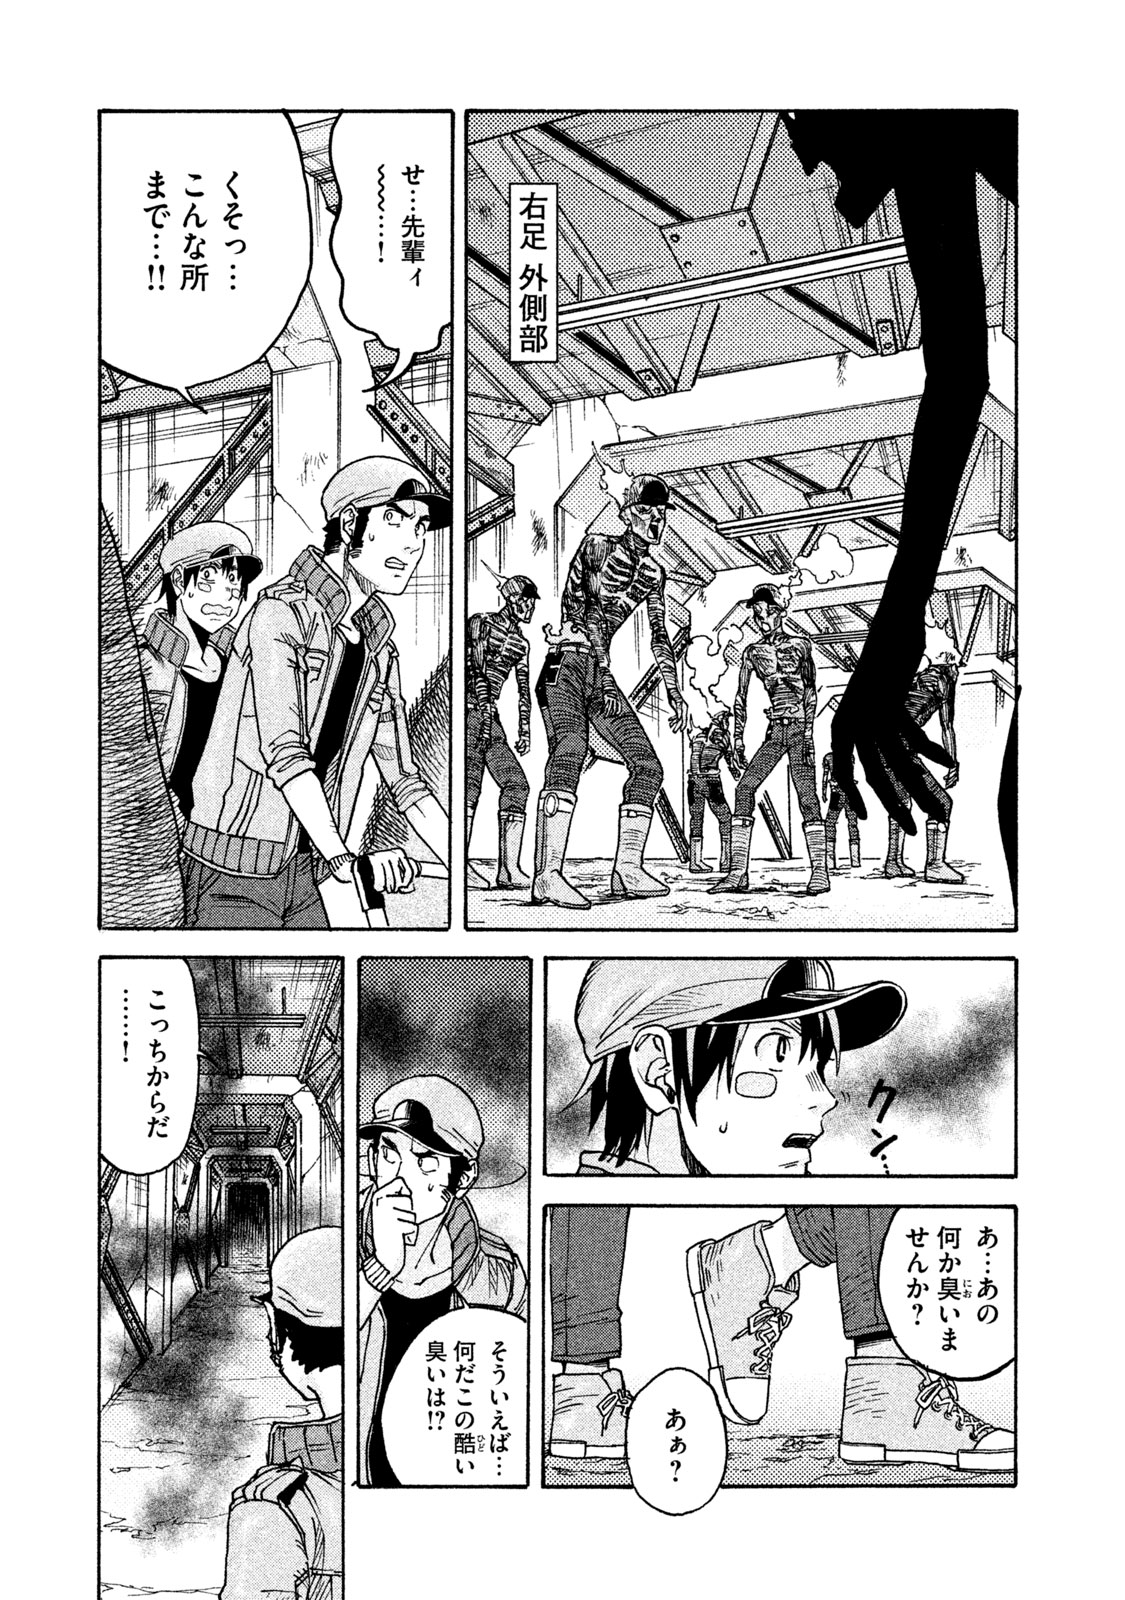 Hataraku Saibou BLACK - Chapter 24 - Page 15